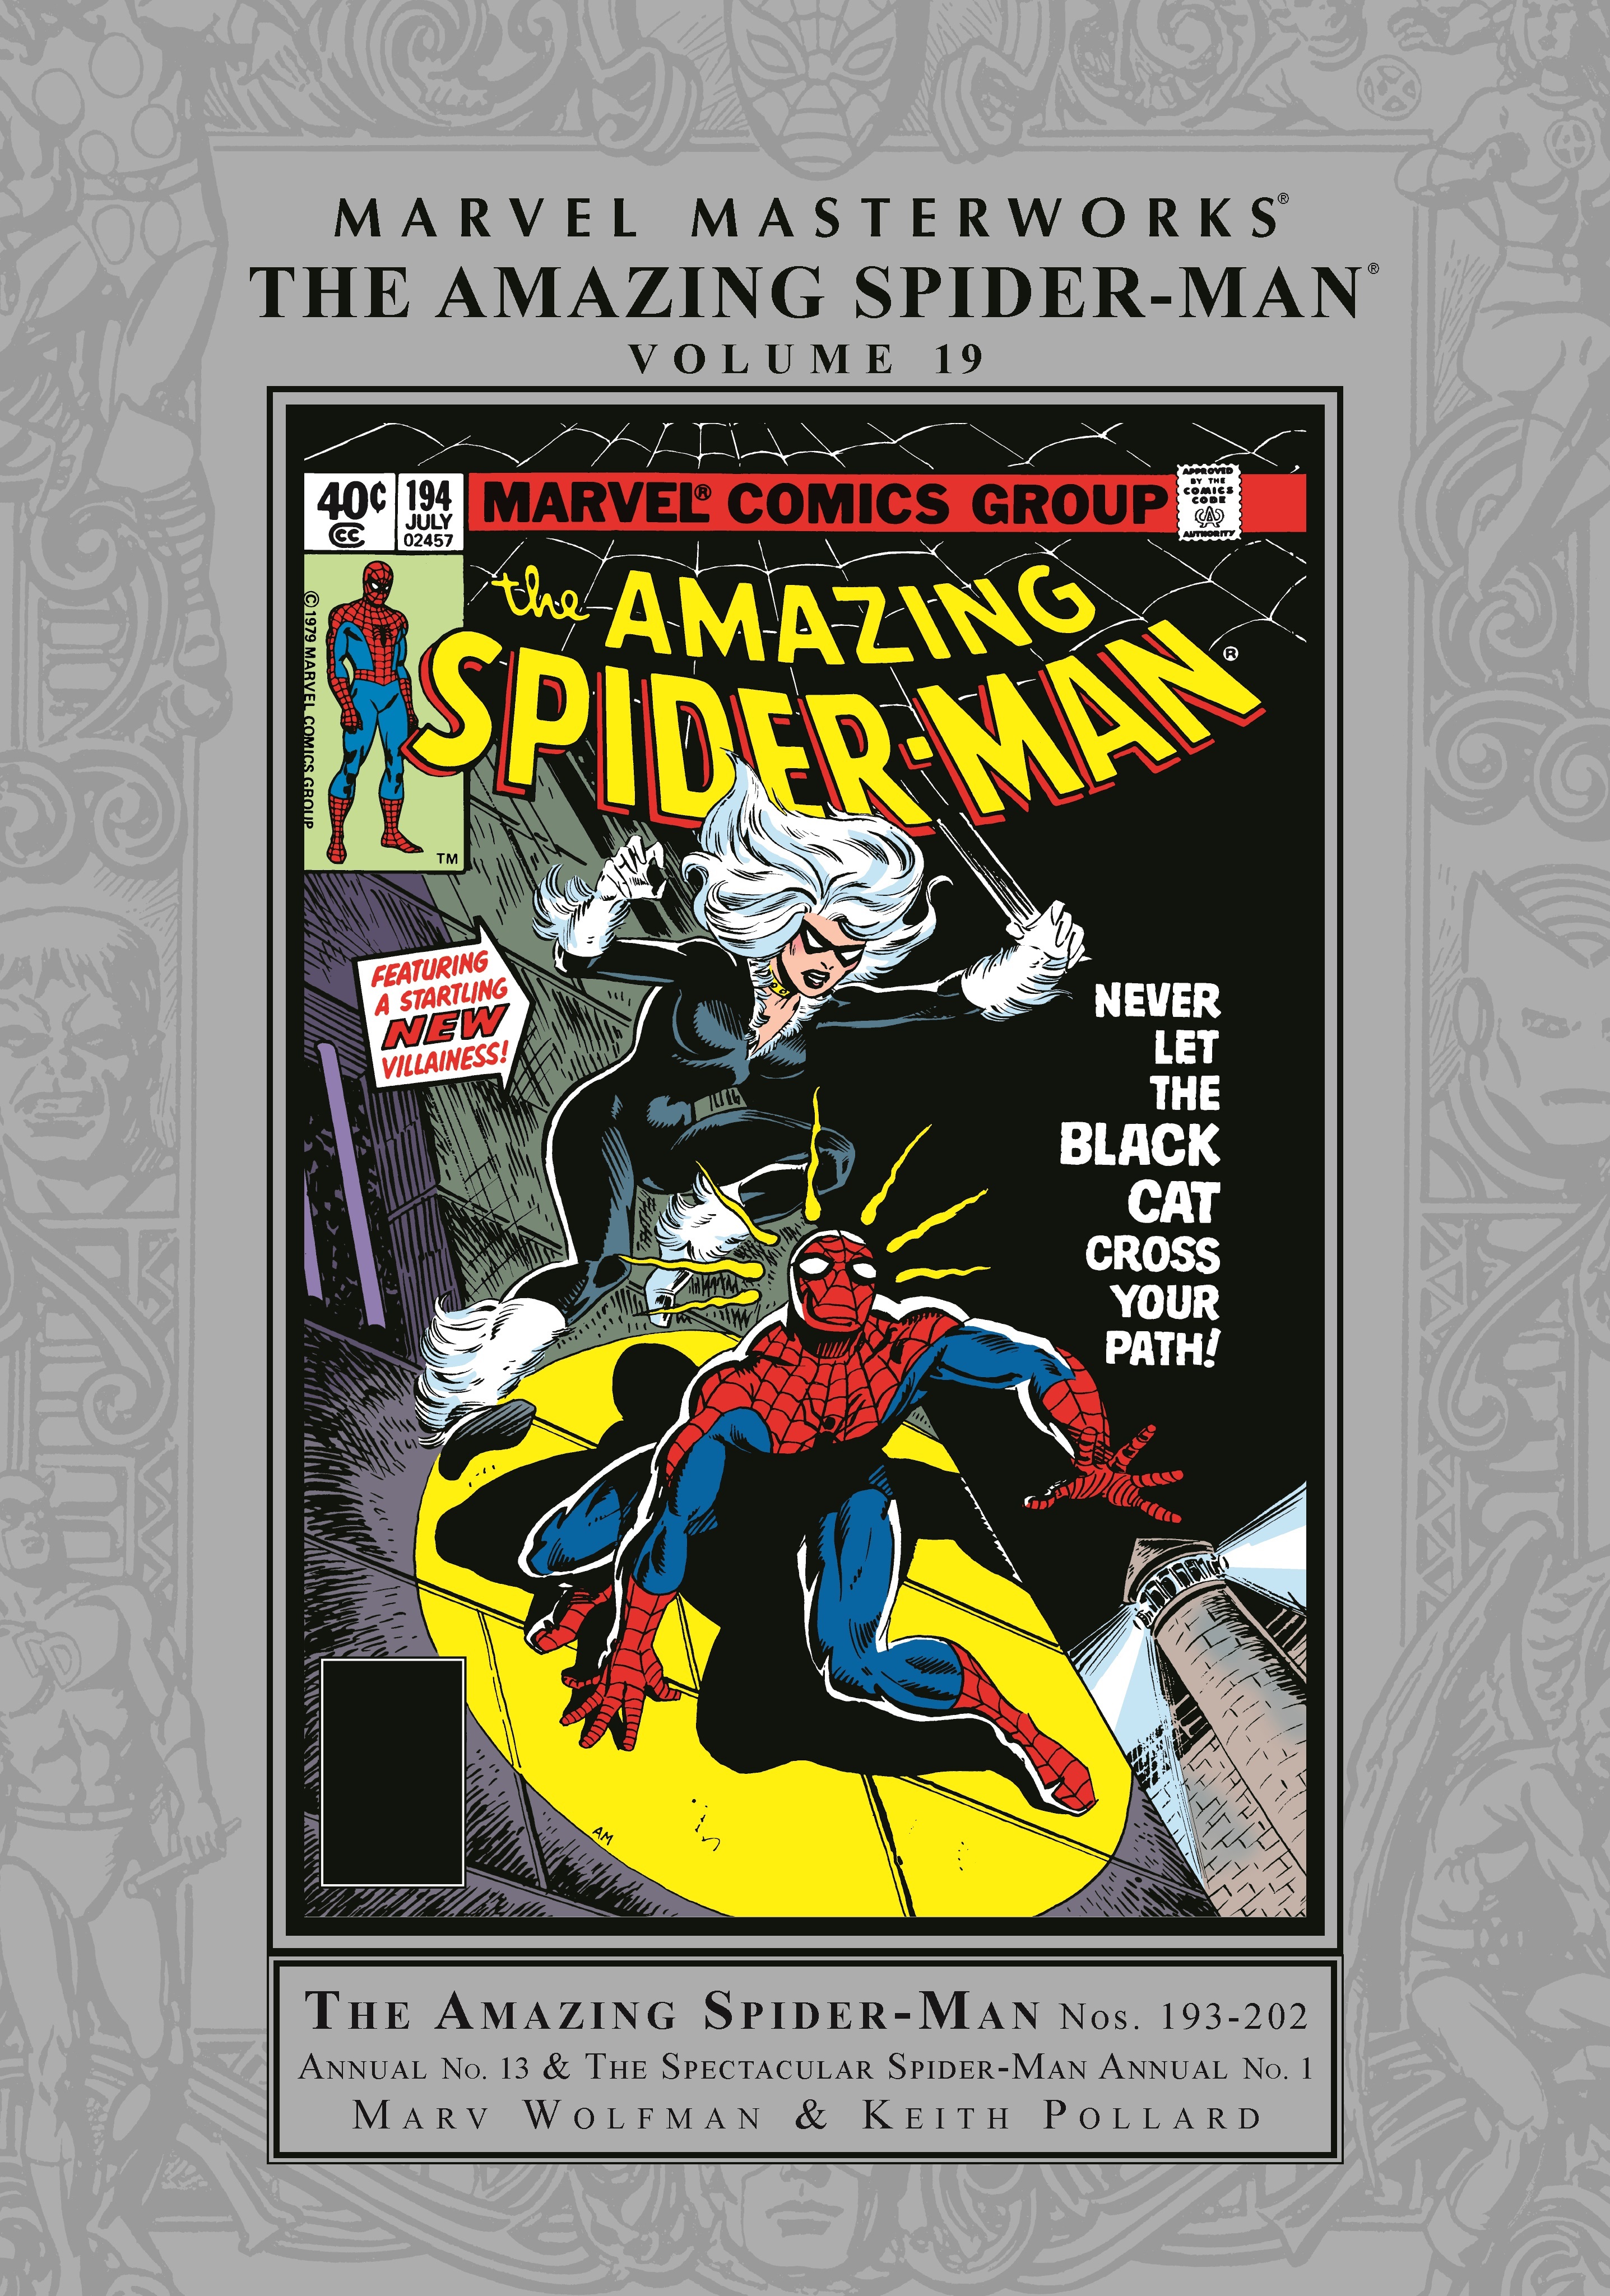 MARVEL MASTERWORKS: THE AMAZING SPIDER-MAN VOL. 19 HC (Hardcover)